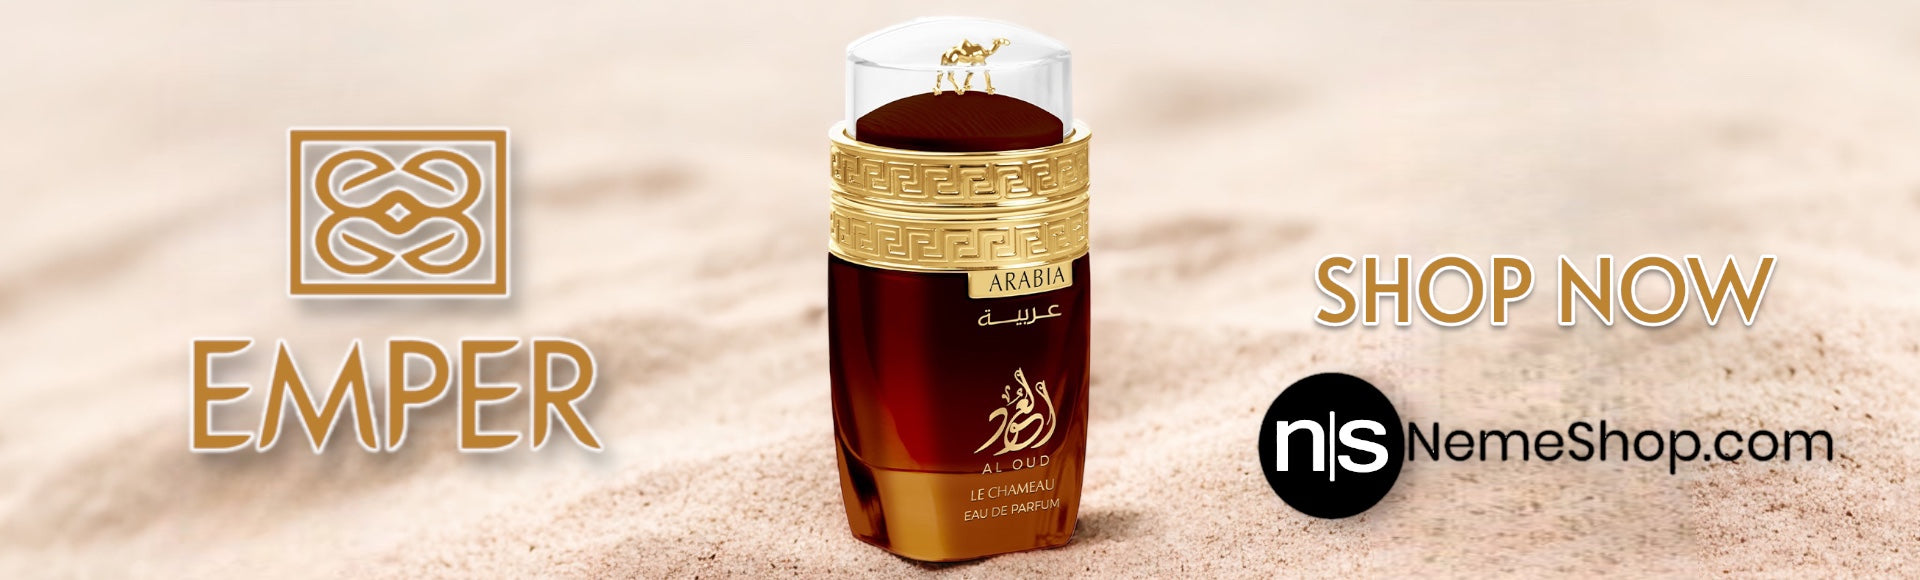 Arabia-Al-Oud-by-Emper-Banner-Nemeshop.com-Perfume